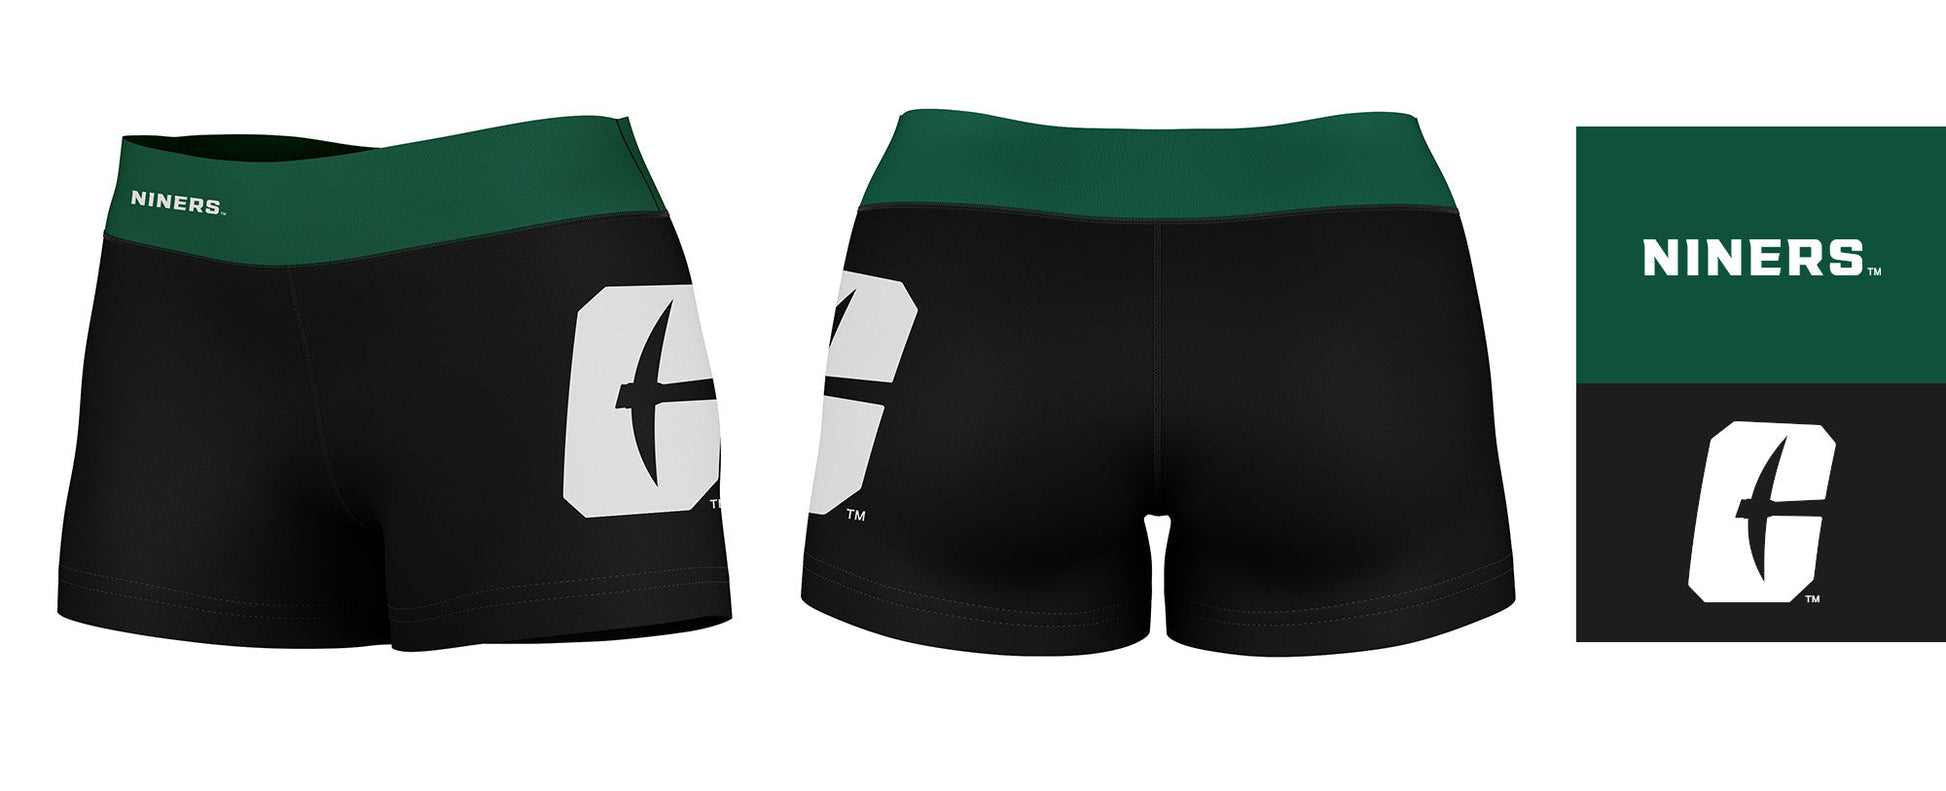 UNC Charlotte 49ers Vive La Fete Logo on Thigh & Waistband Black & Green Women Yoga Booty Workout Shorts 3.75 Inseam - Vive La F̻te - Online Apparel Store